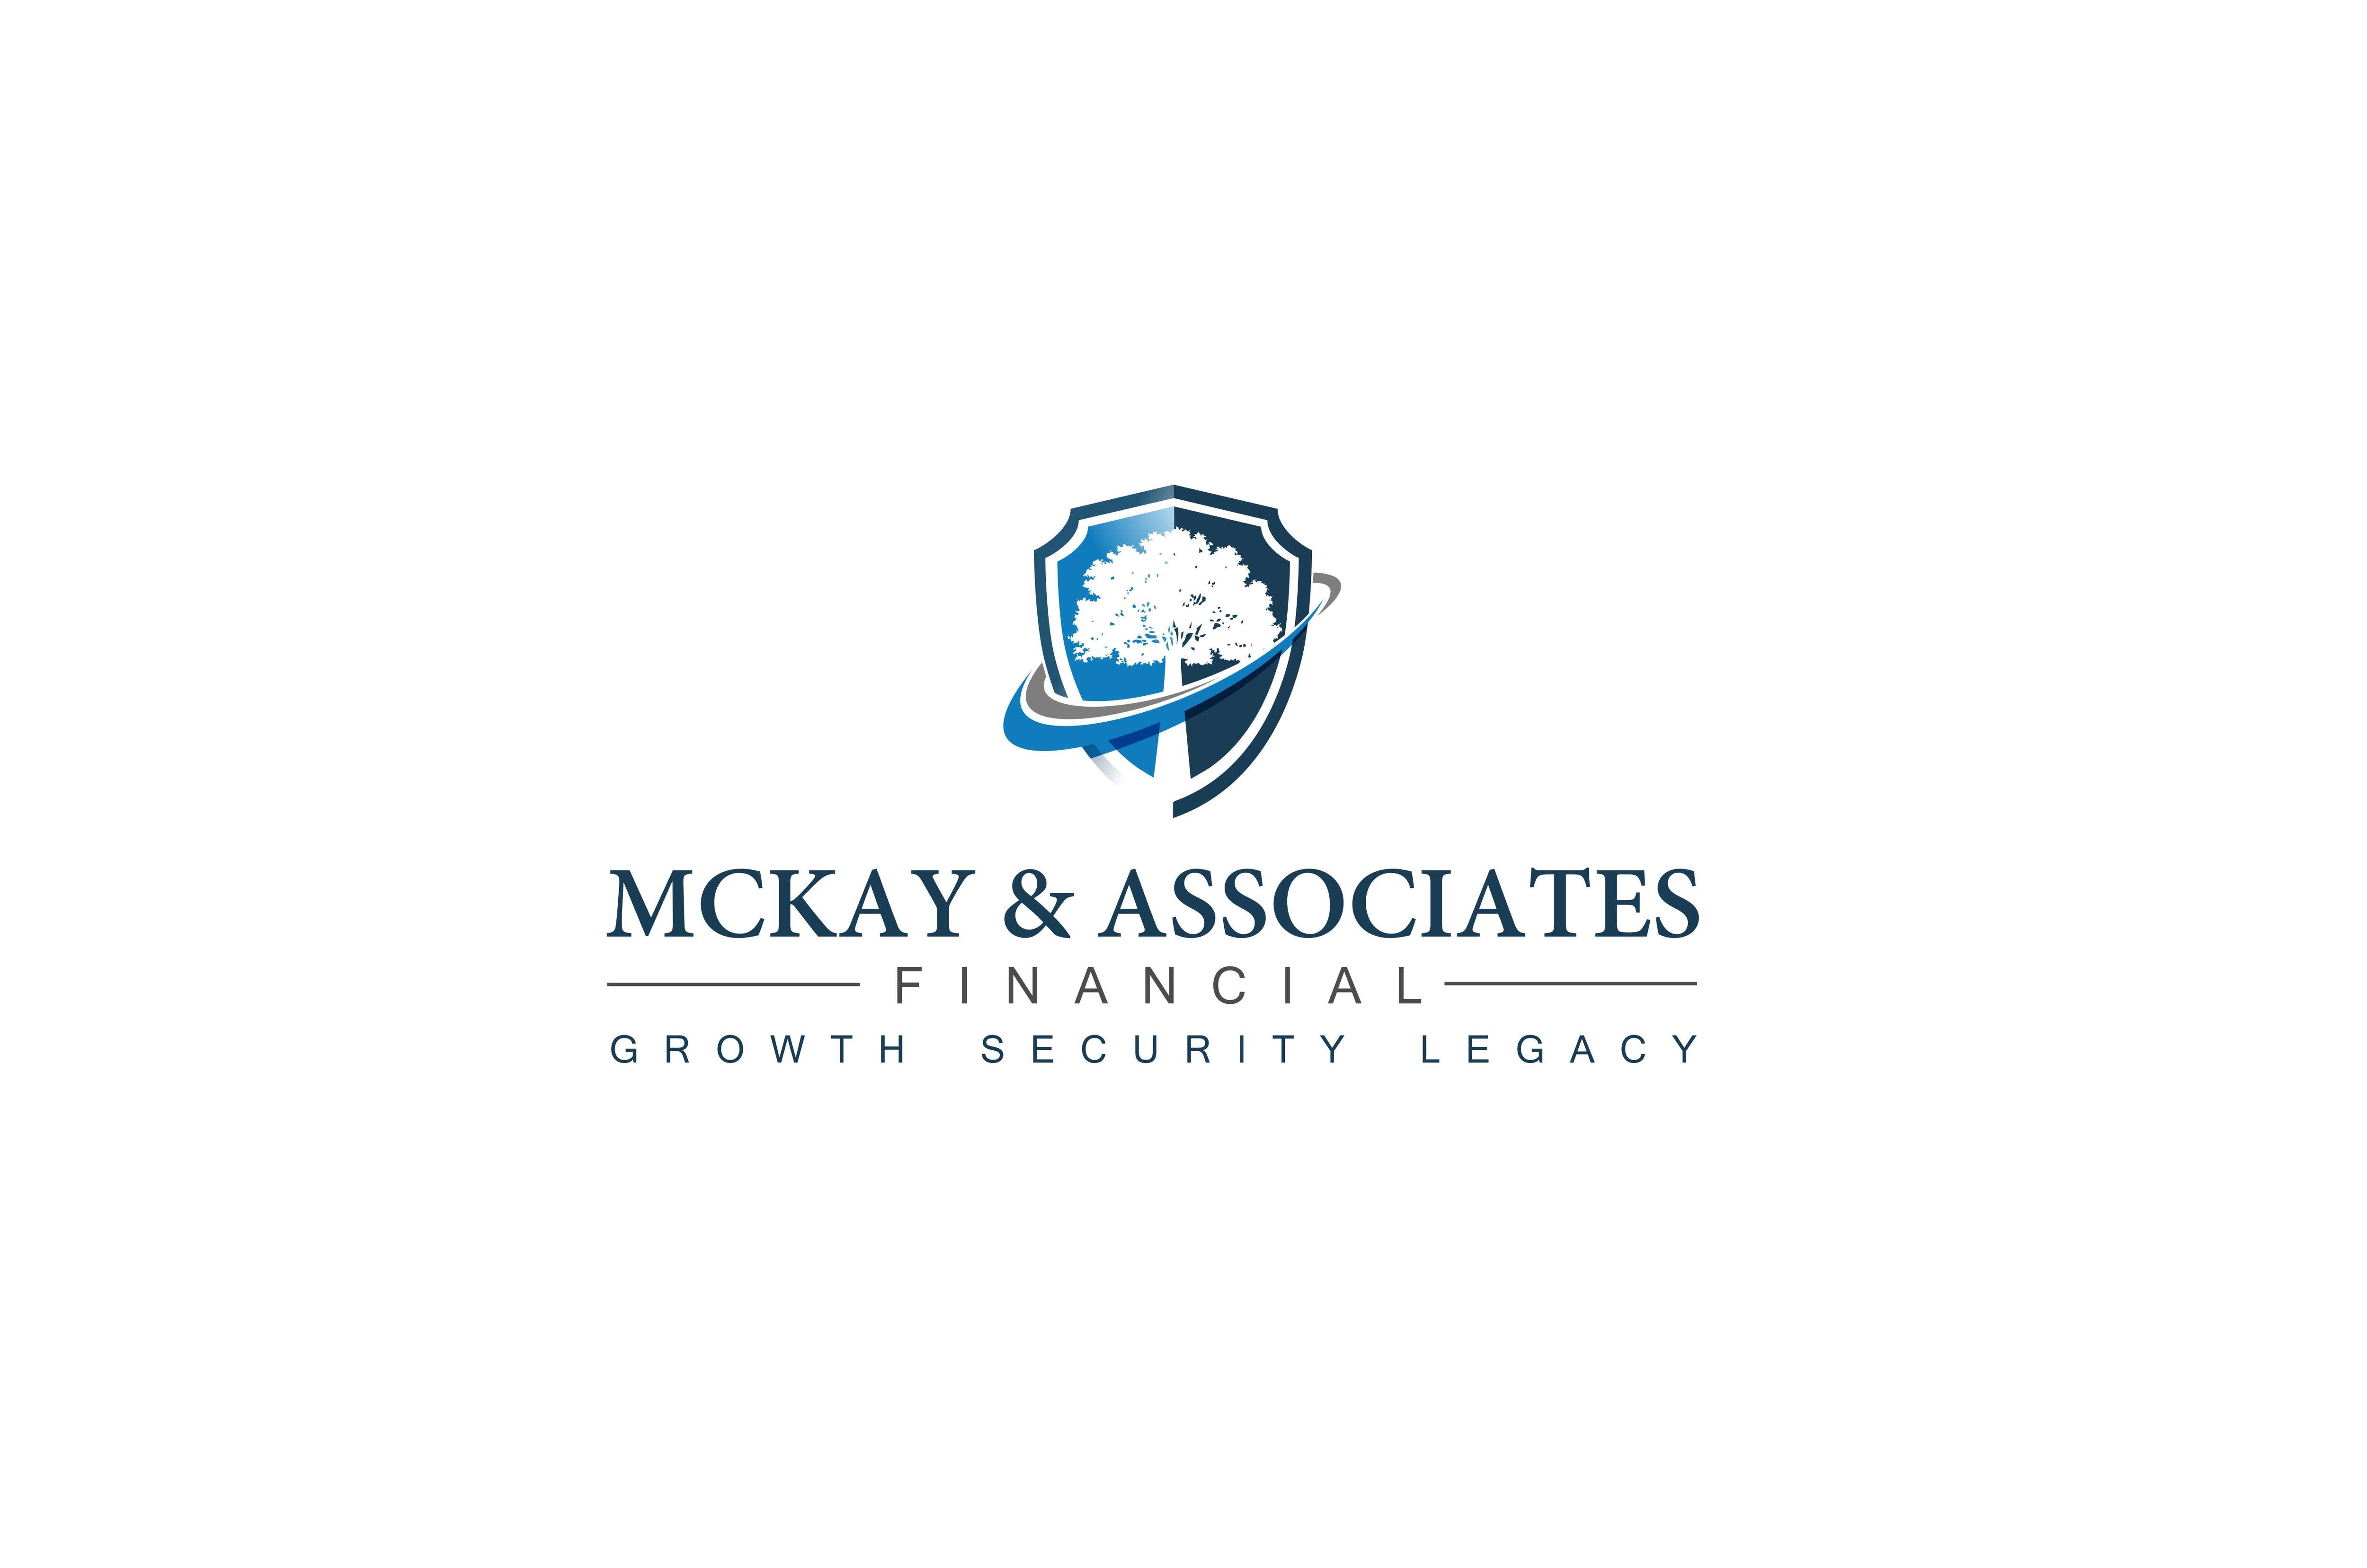 McKay & Associates Financial Inc.